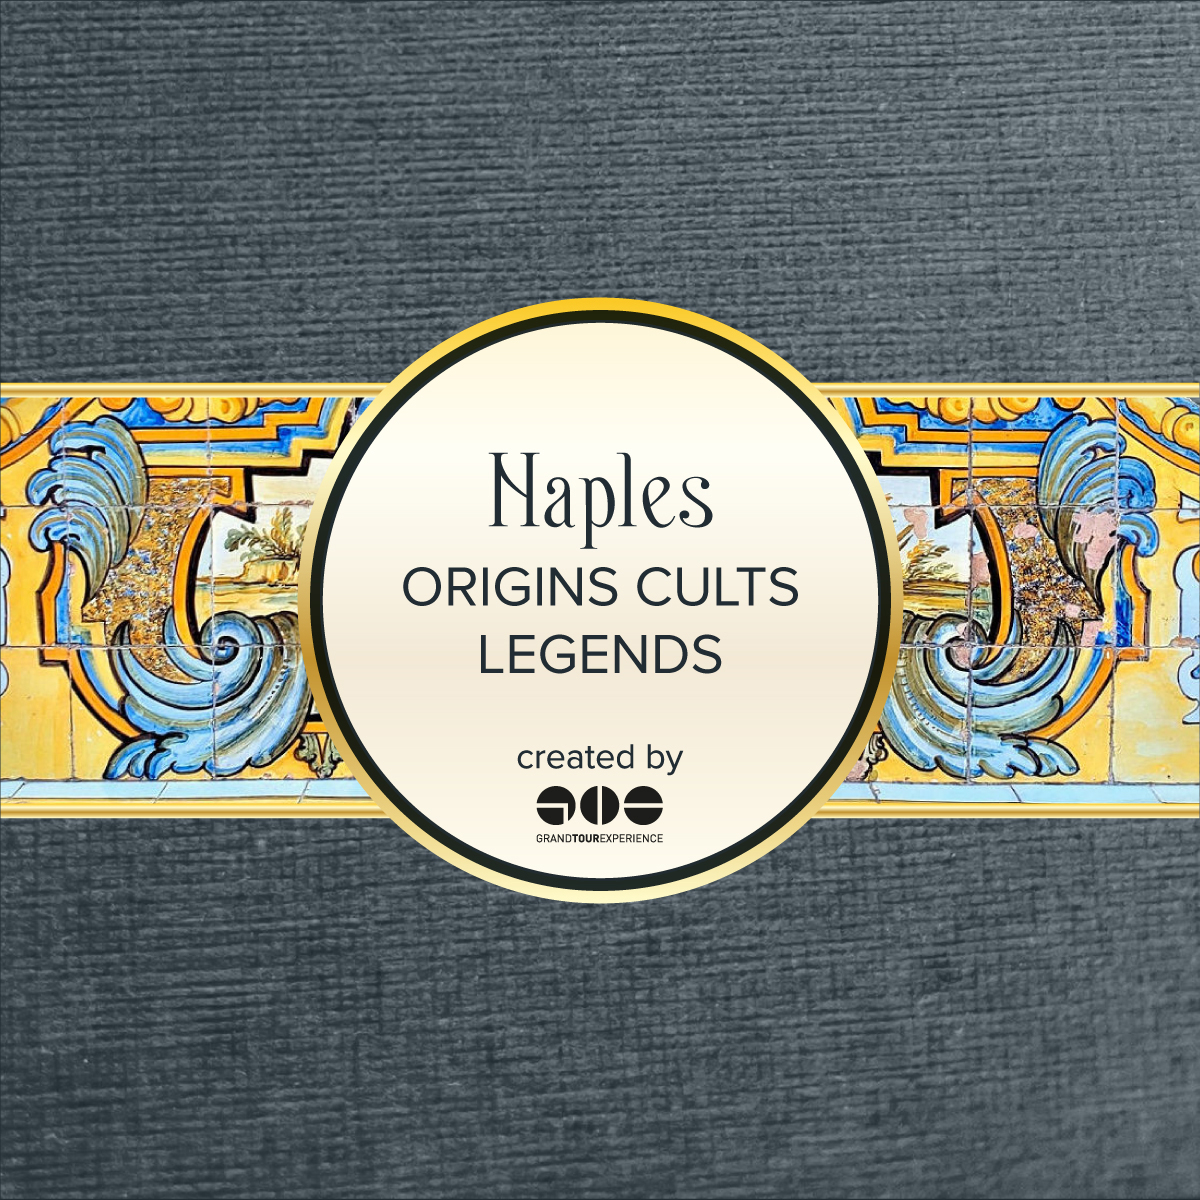 Historical Naples: Origins, Cults and Legends